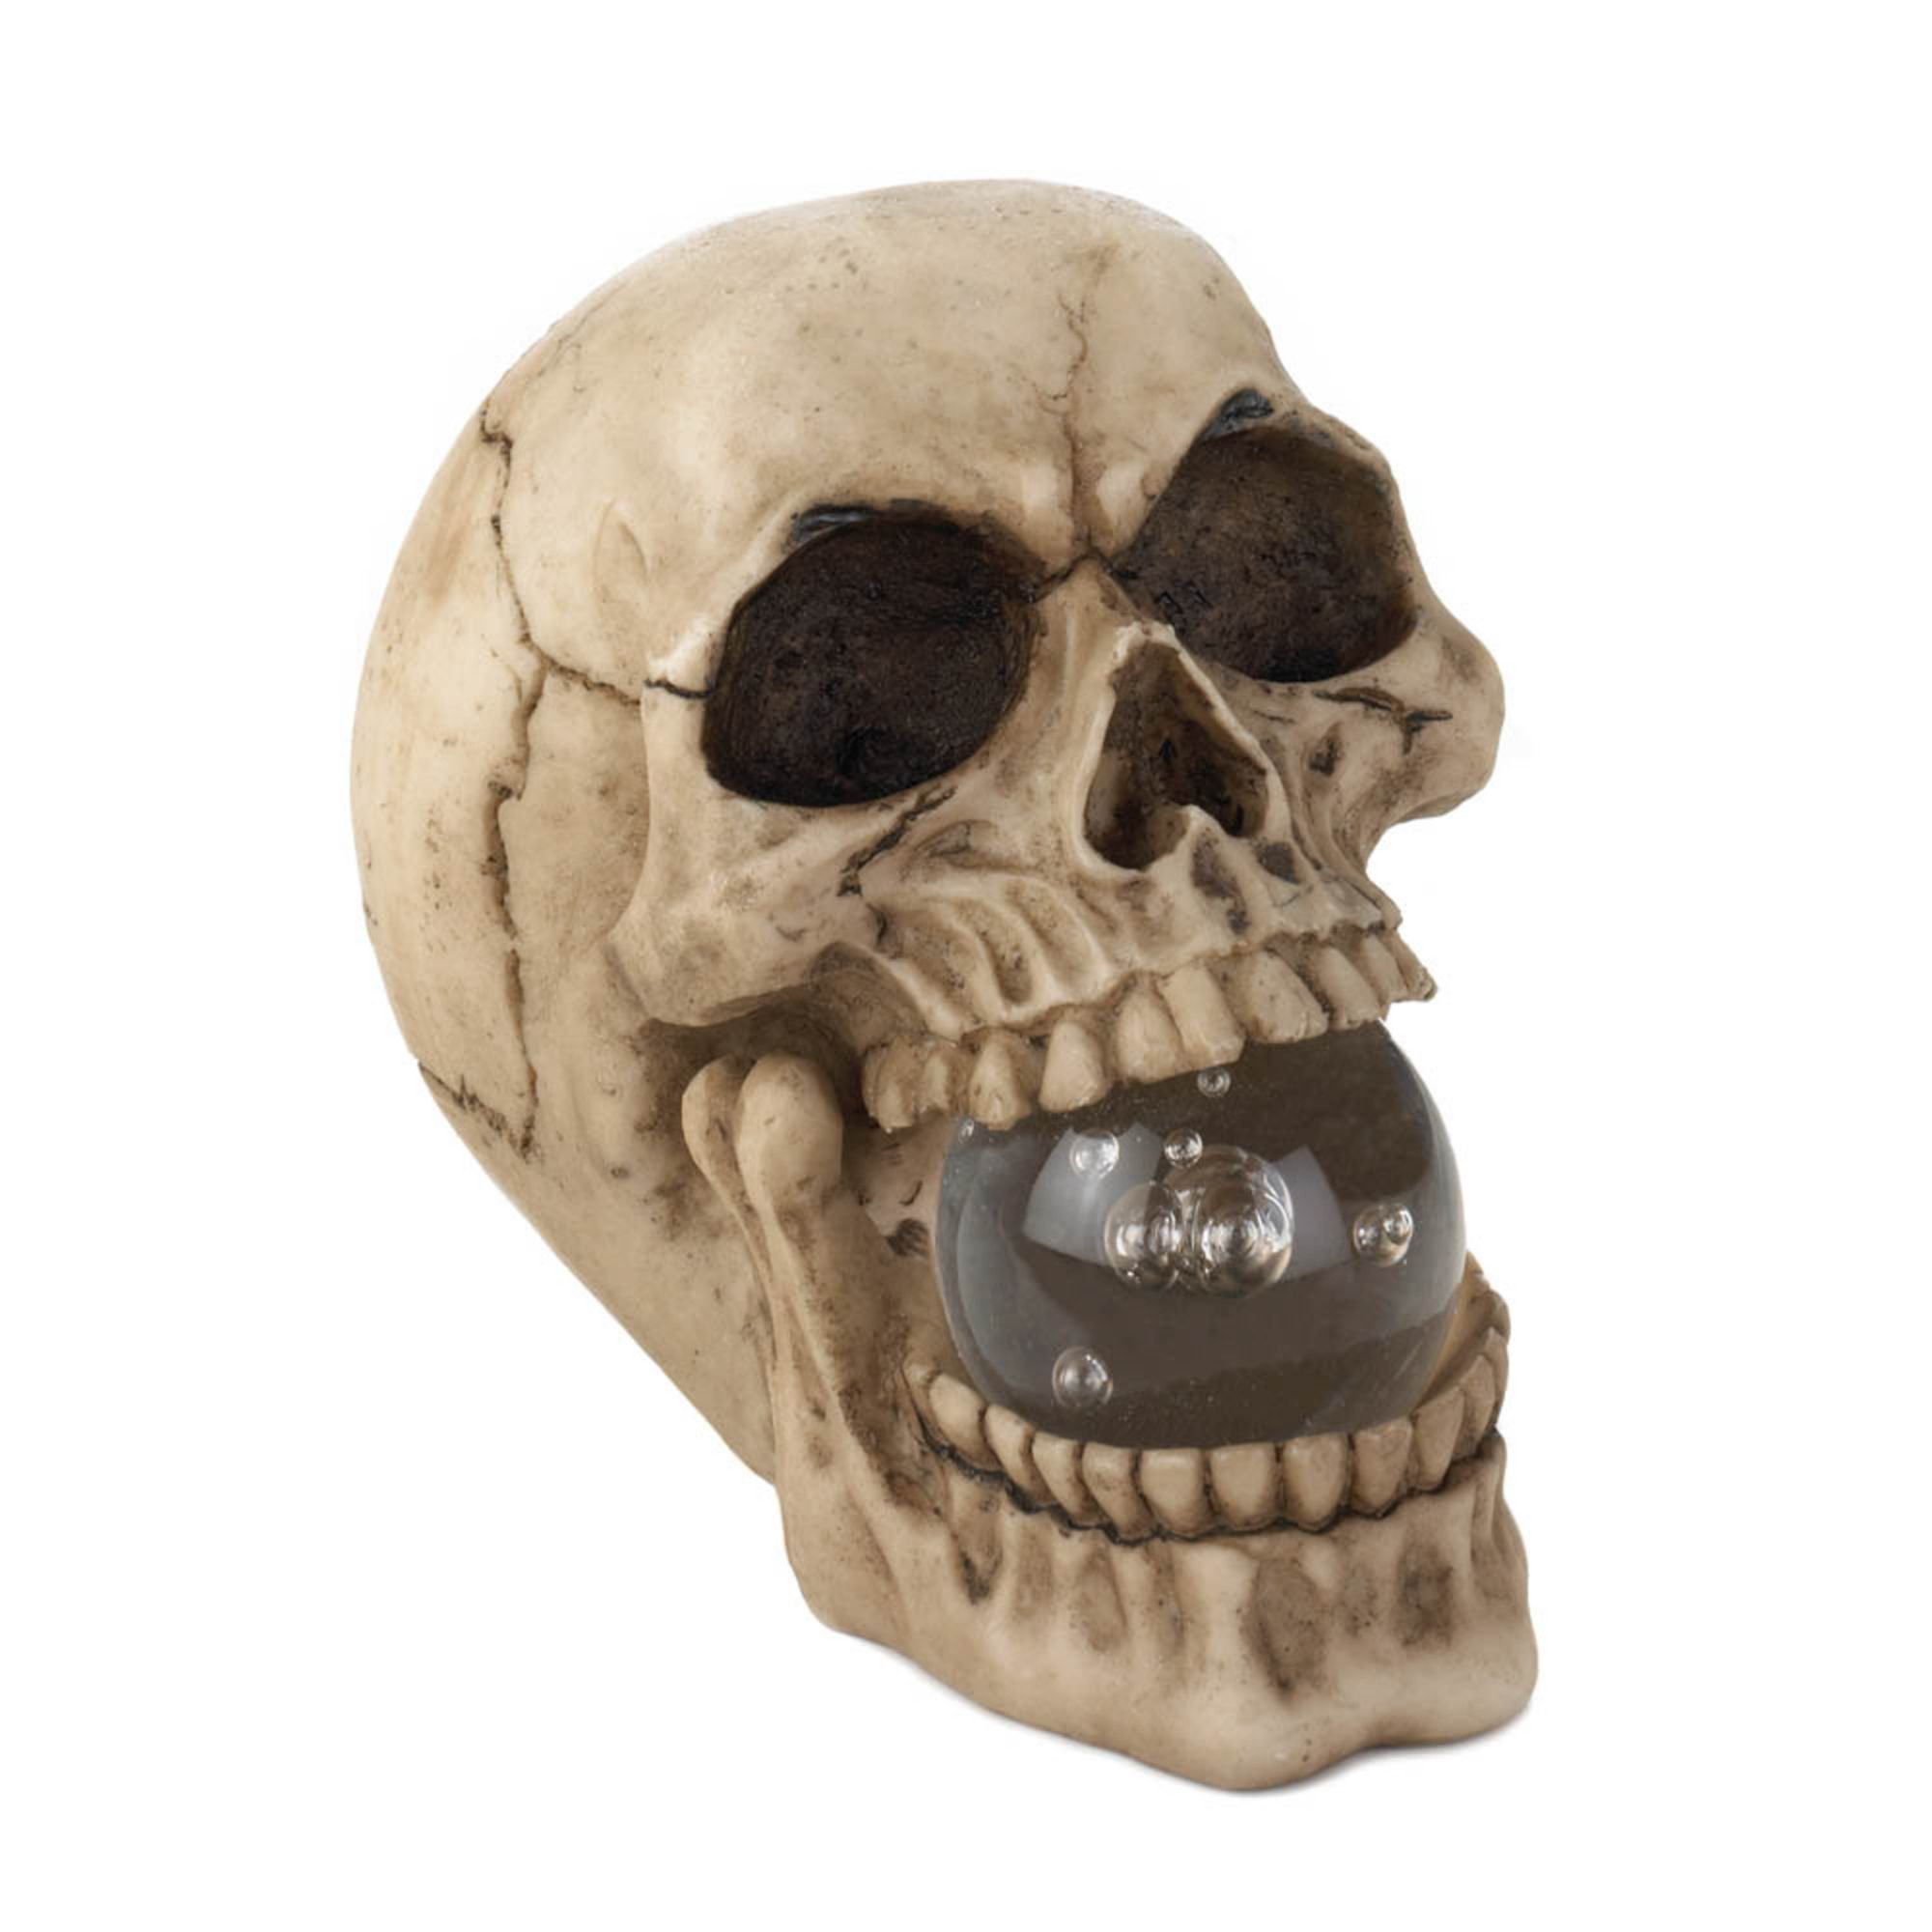 NEW Halloween Prop Human Skulls/Skeleton Aged Devil Skull w/ 2" Horns 